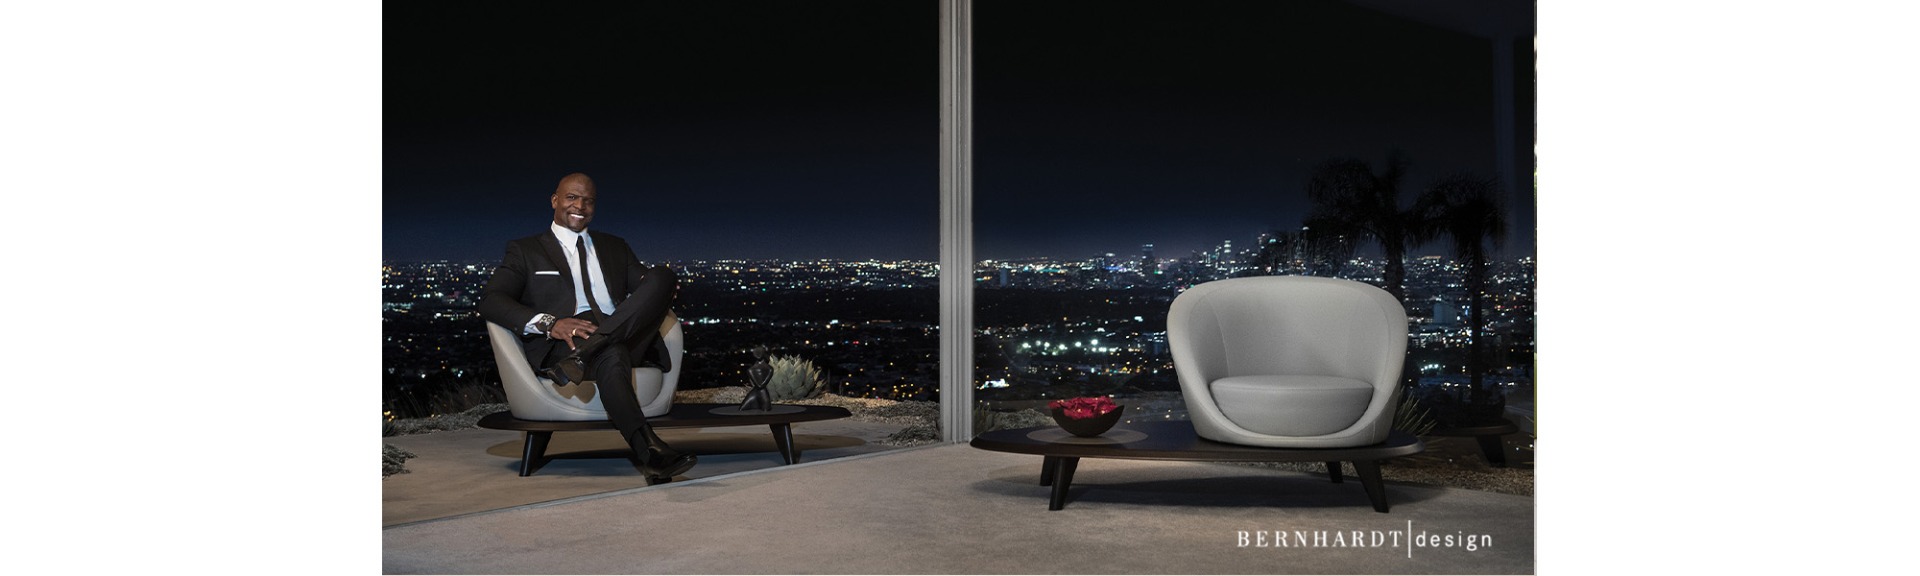 KE-ZU Furniture Sydney Bernhardt Design Lilypad Lounge Chair